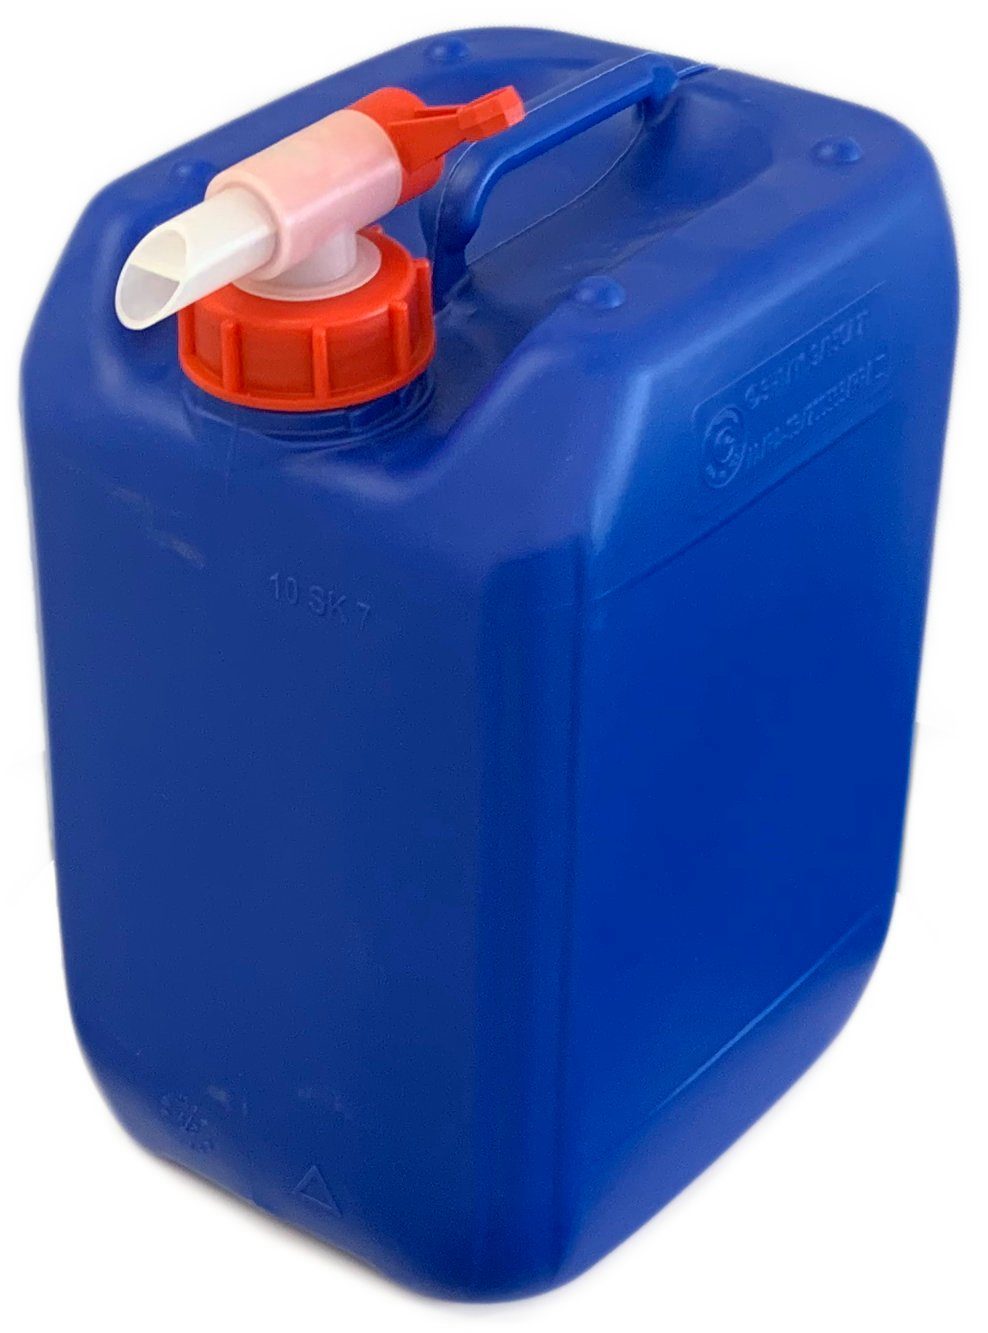 Kanister (1 plasteo® 4 Getränke- Plasteo St) Wasserkanister x 10L